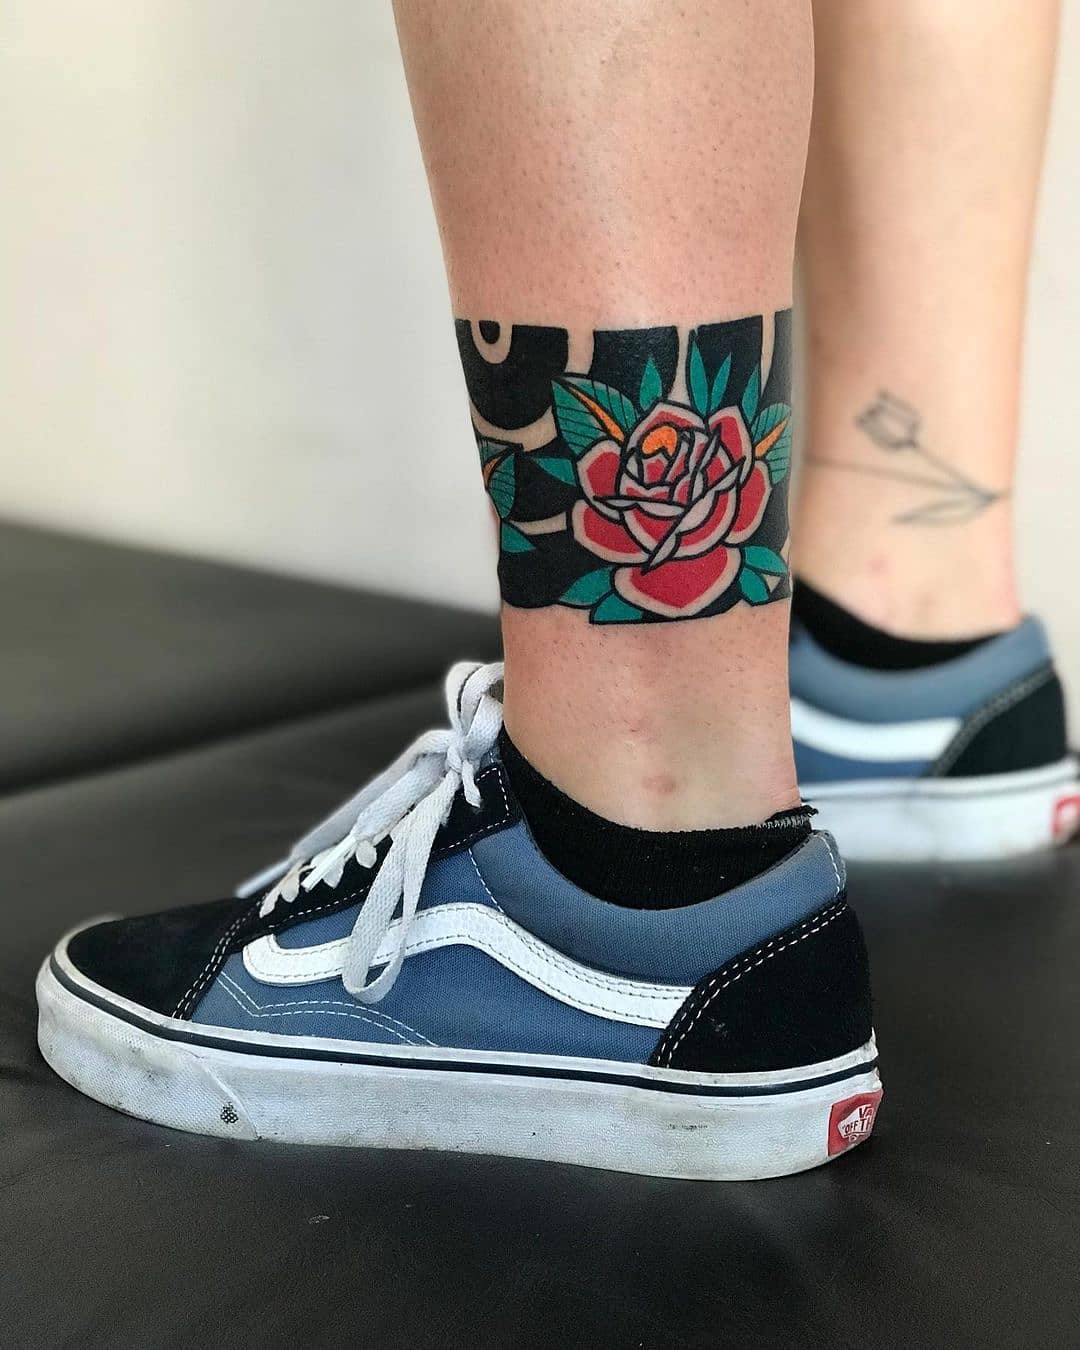 Rose tattoo by oldschooltattz